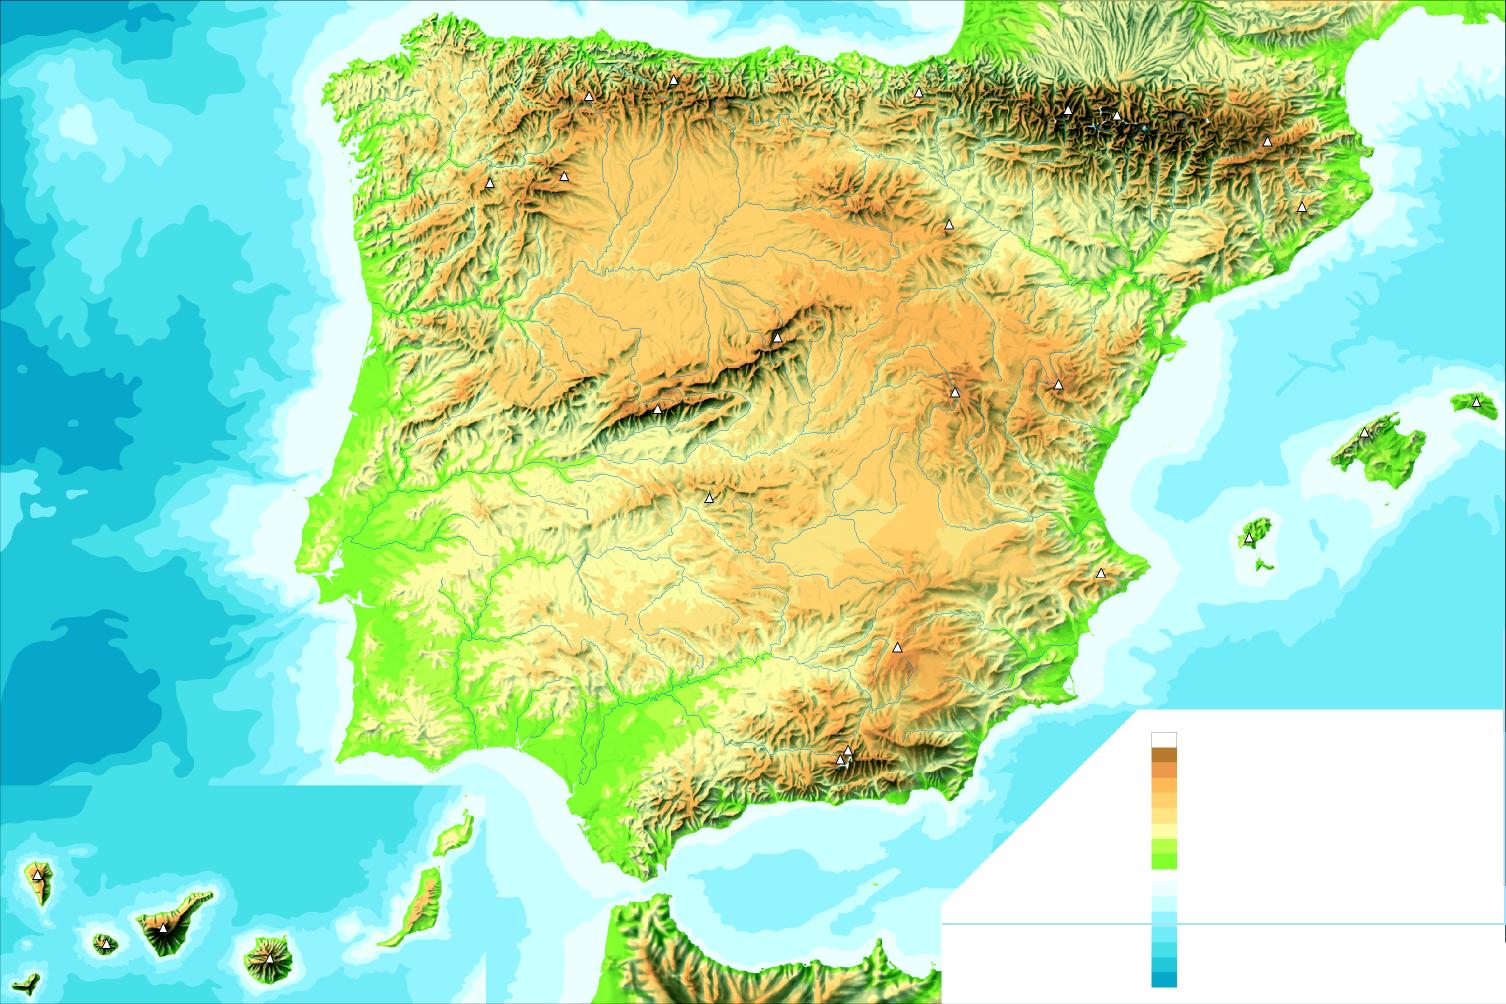 https://blogger.googleusercontent.com/img/b/R29vZ2xl/AVvXsEjdK9GqZaMs0AeEHnjVUxomTZ7BulCpioyiMHr1ARMWTDJxgnolcRLKr0aoFMM0NJwFqfo3p1XHw6V2CEukJOIlYJJMrpgf6F8P-vk3CRYvQjF9tu8X8g7hwa5LjMefzmoc9yHFZ161g1iF/s1600/Mapa-fisico-de-Espana-mudo-4092.jpeg